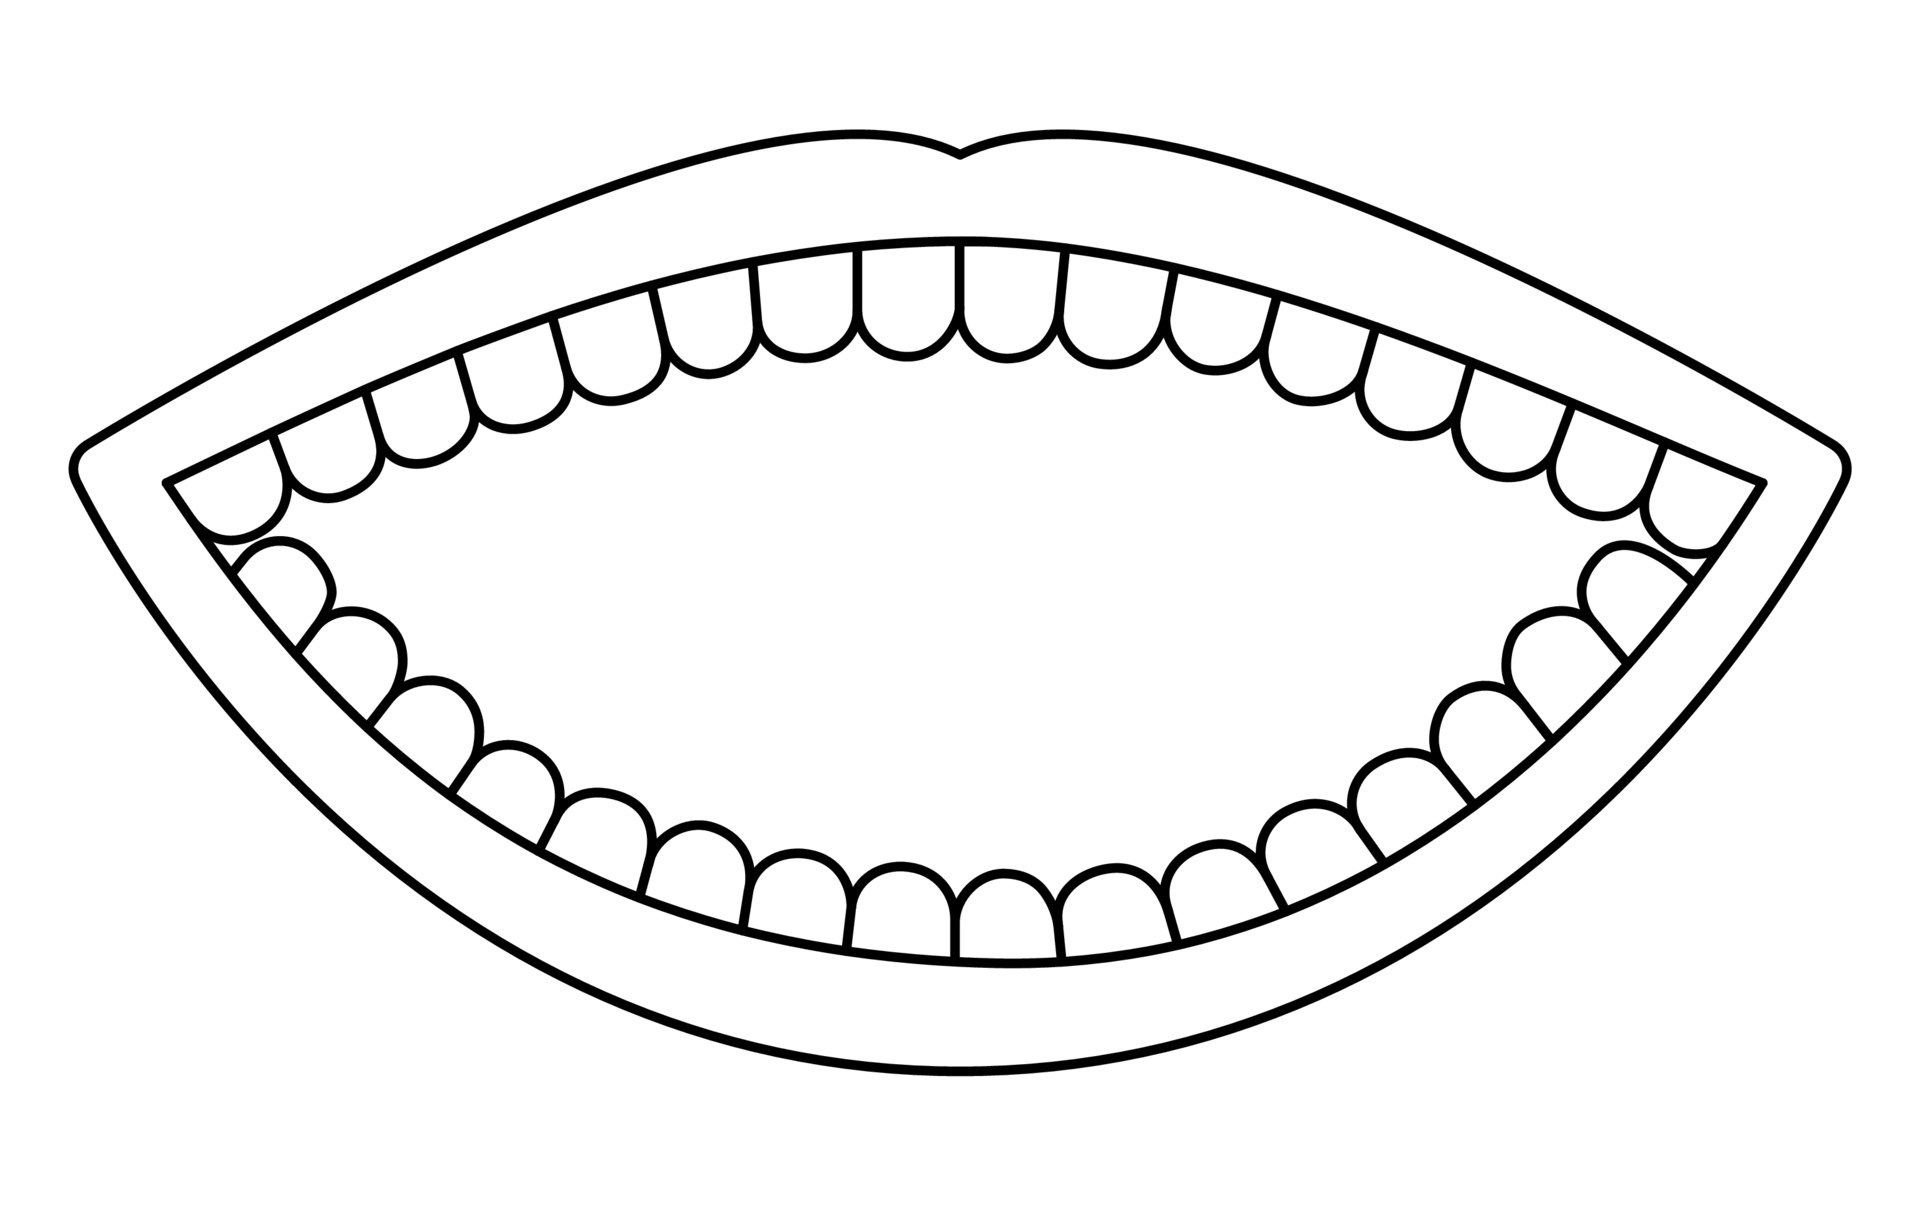 Desenho de Moldura de boca aberta vintage para colorir